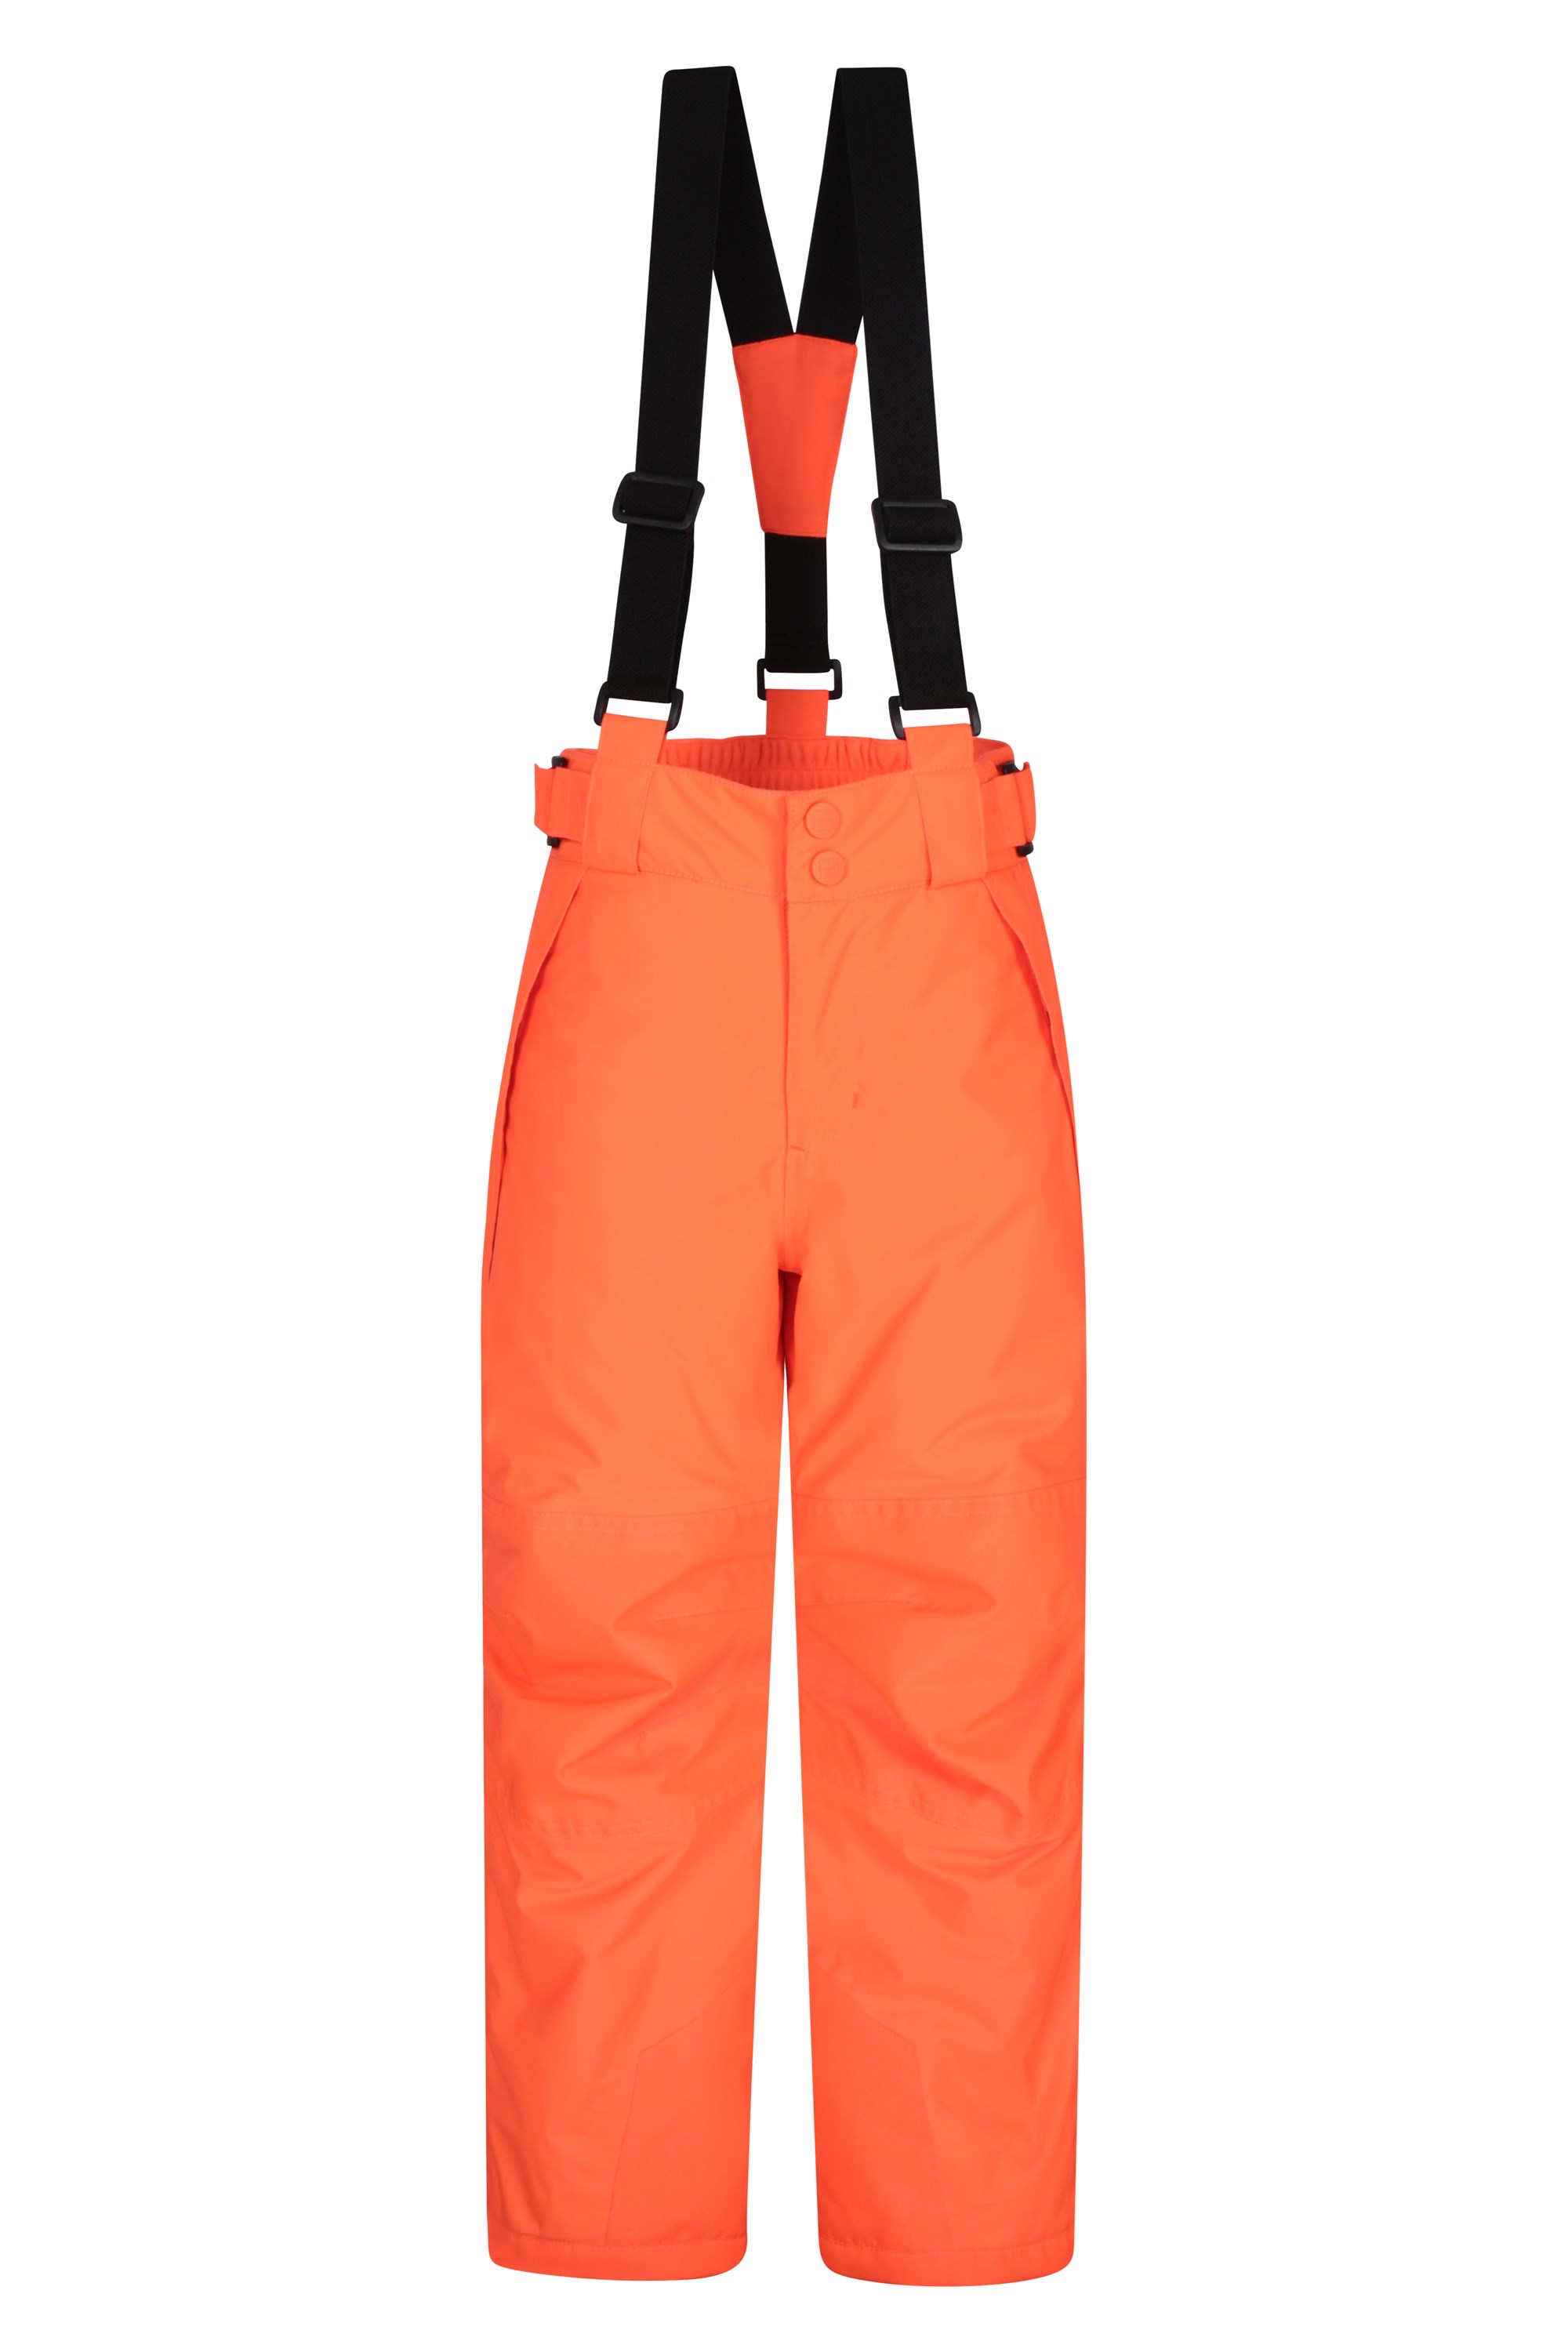 Pantalon de Ski Enfant Falcon Extreme - Orange